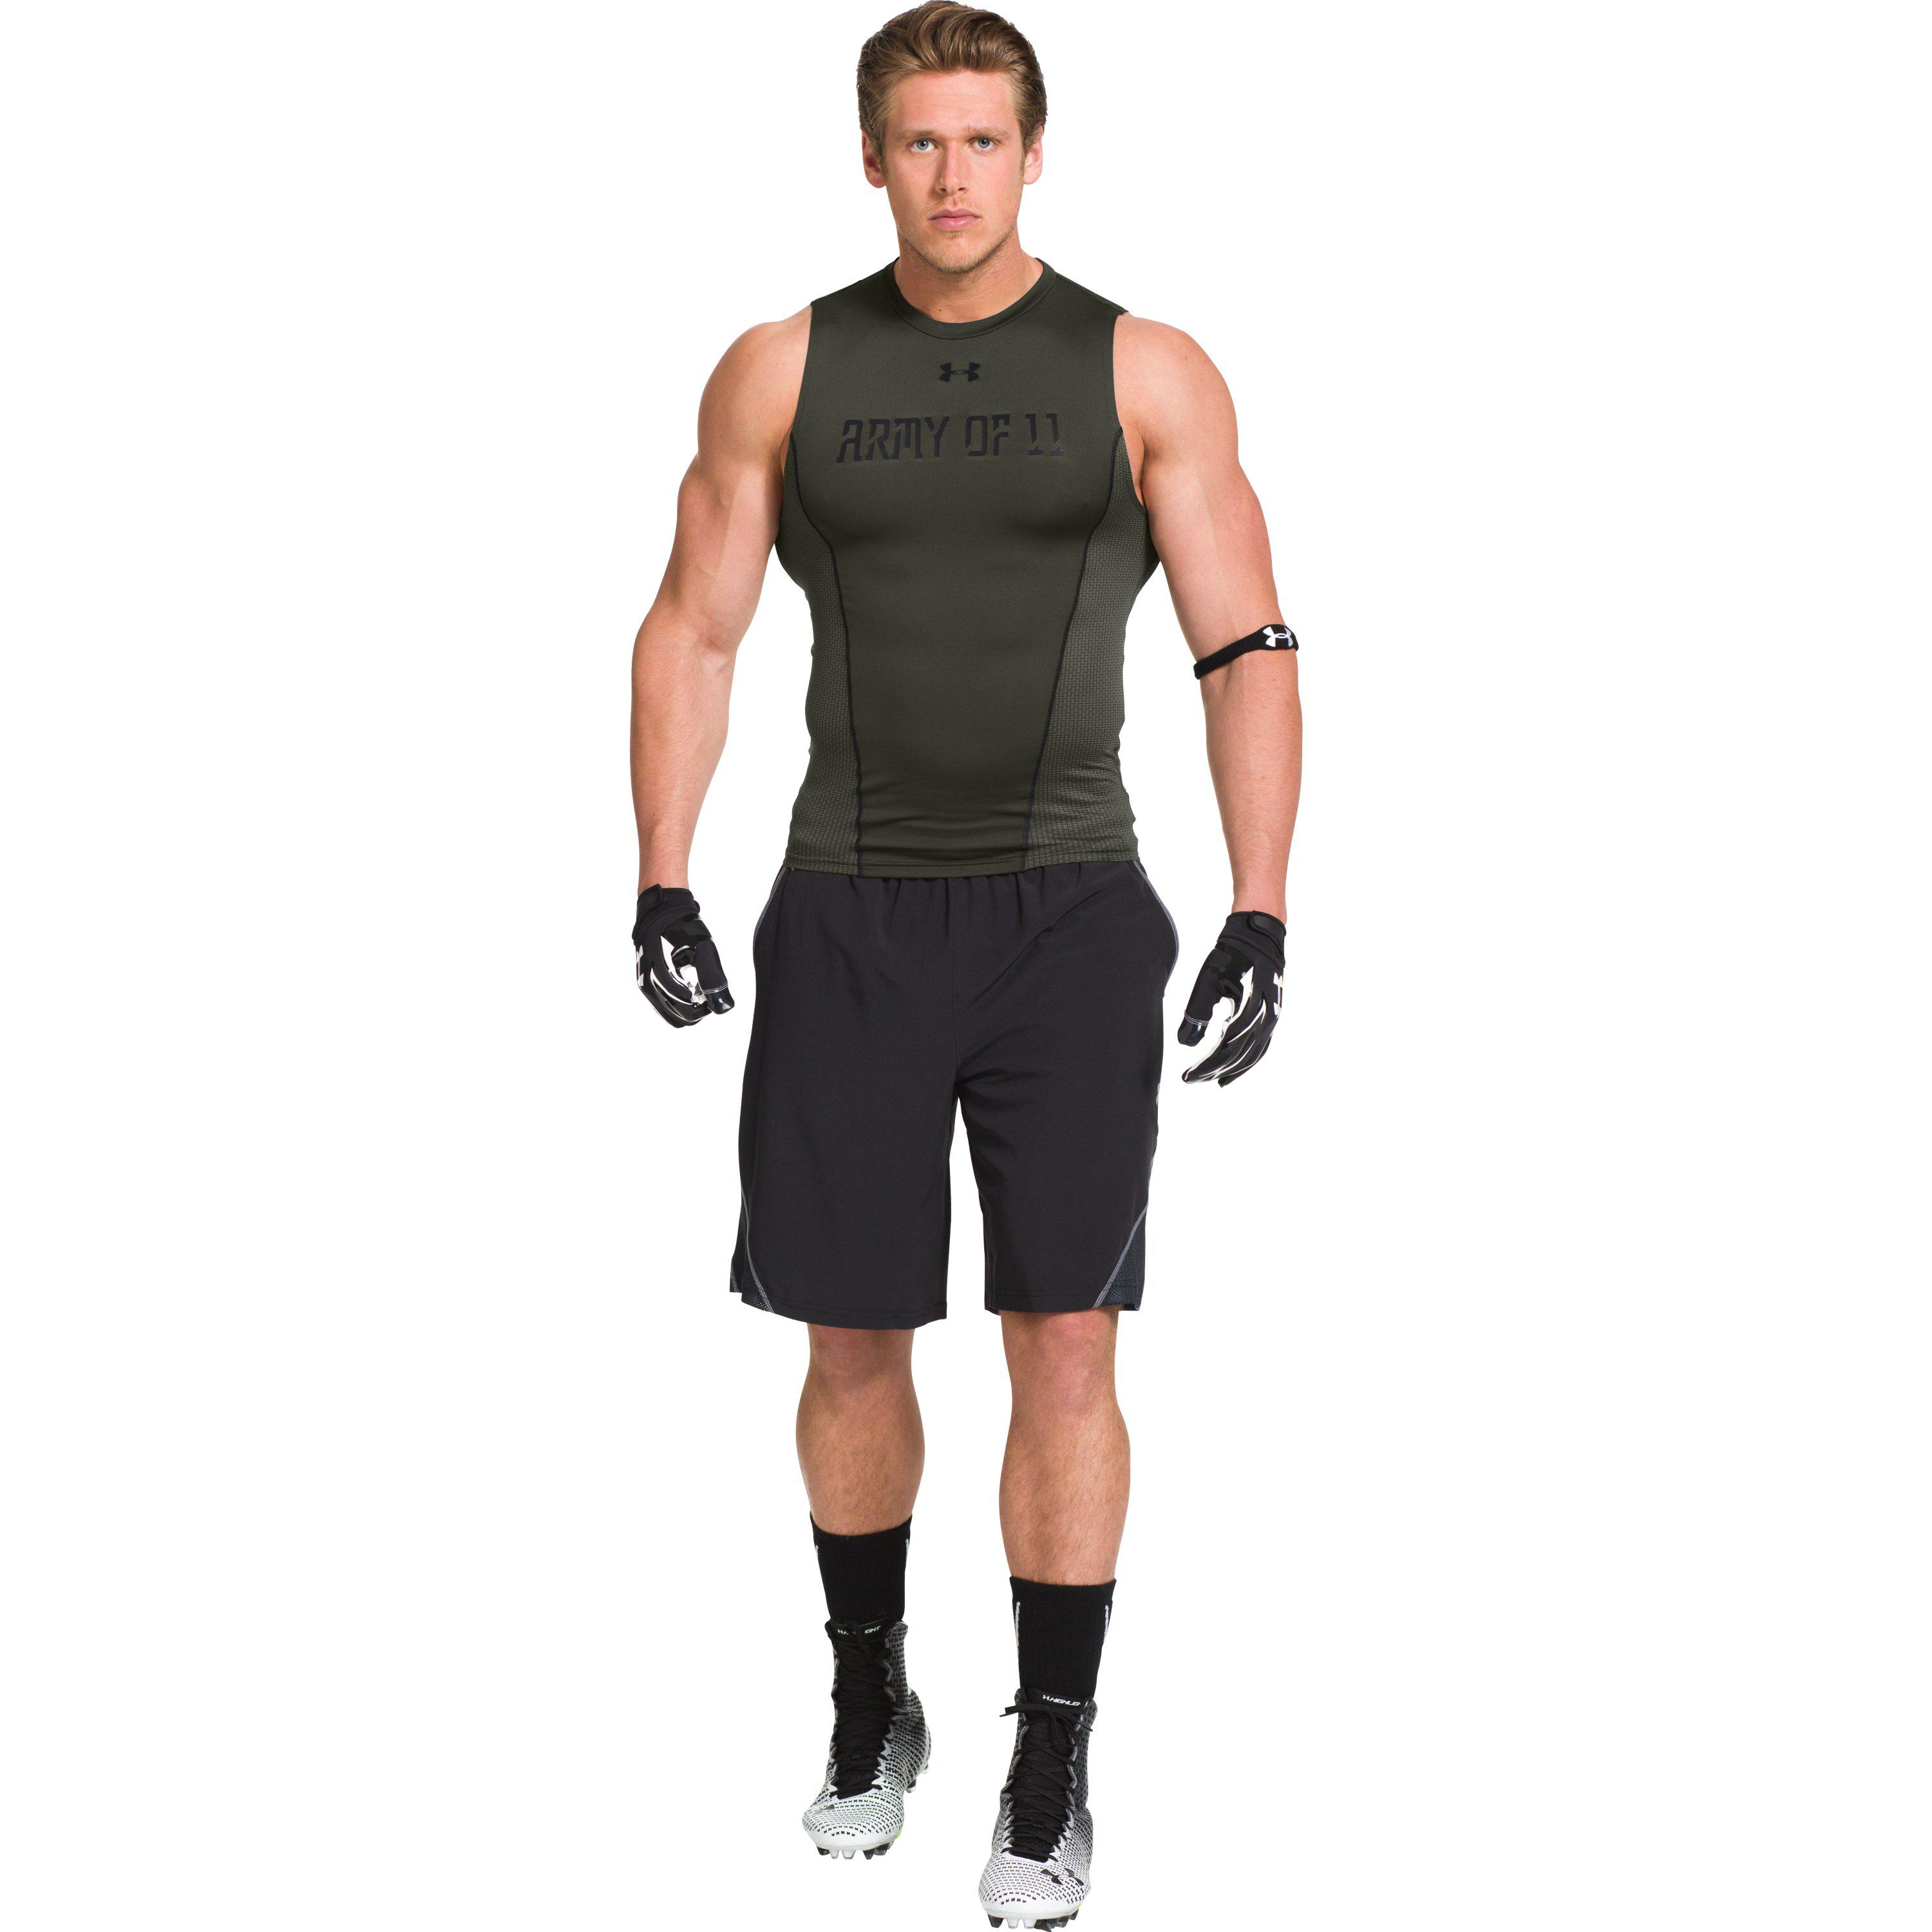 https://cdna.lystit.com/photos/underarmour/d5032c82/under-armour-Rifle-Green-Mens-Ua-Army-Of-11-Football-Sleeveless-Compression-Shirt.jpeg